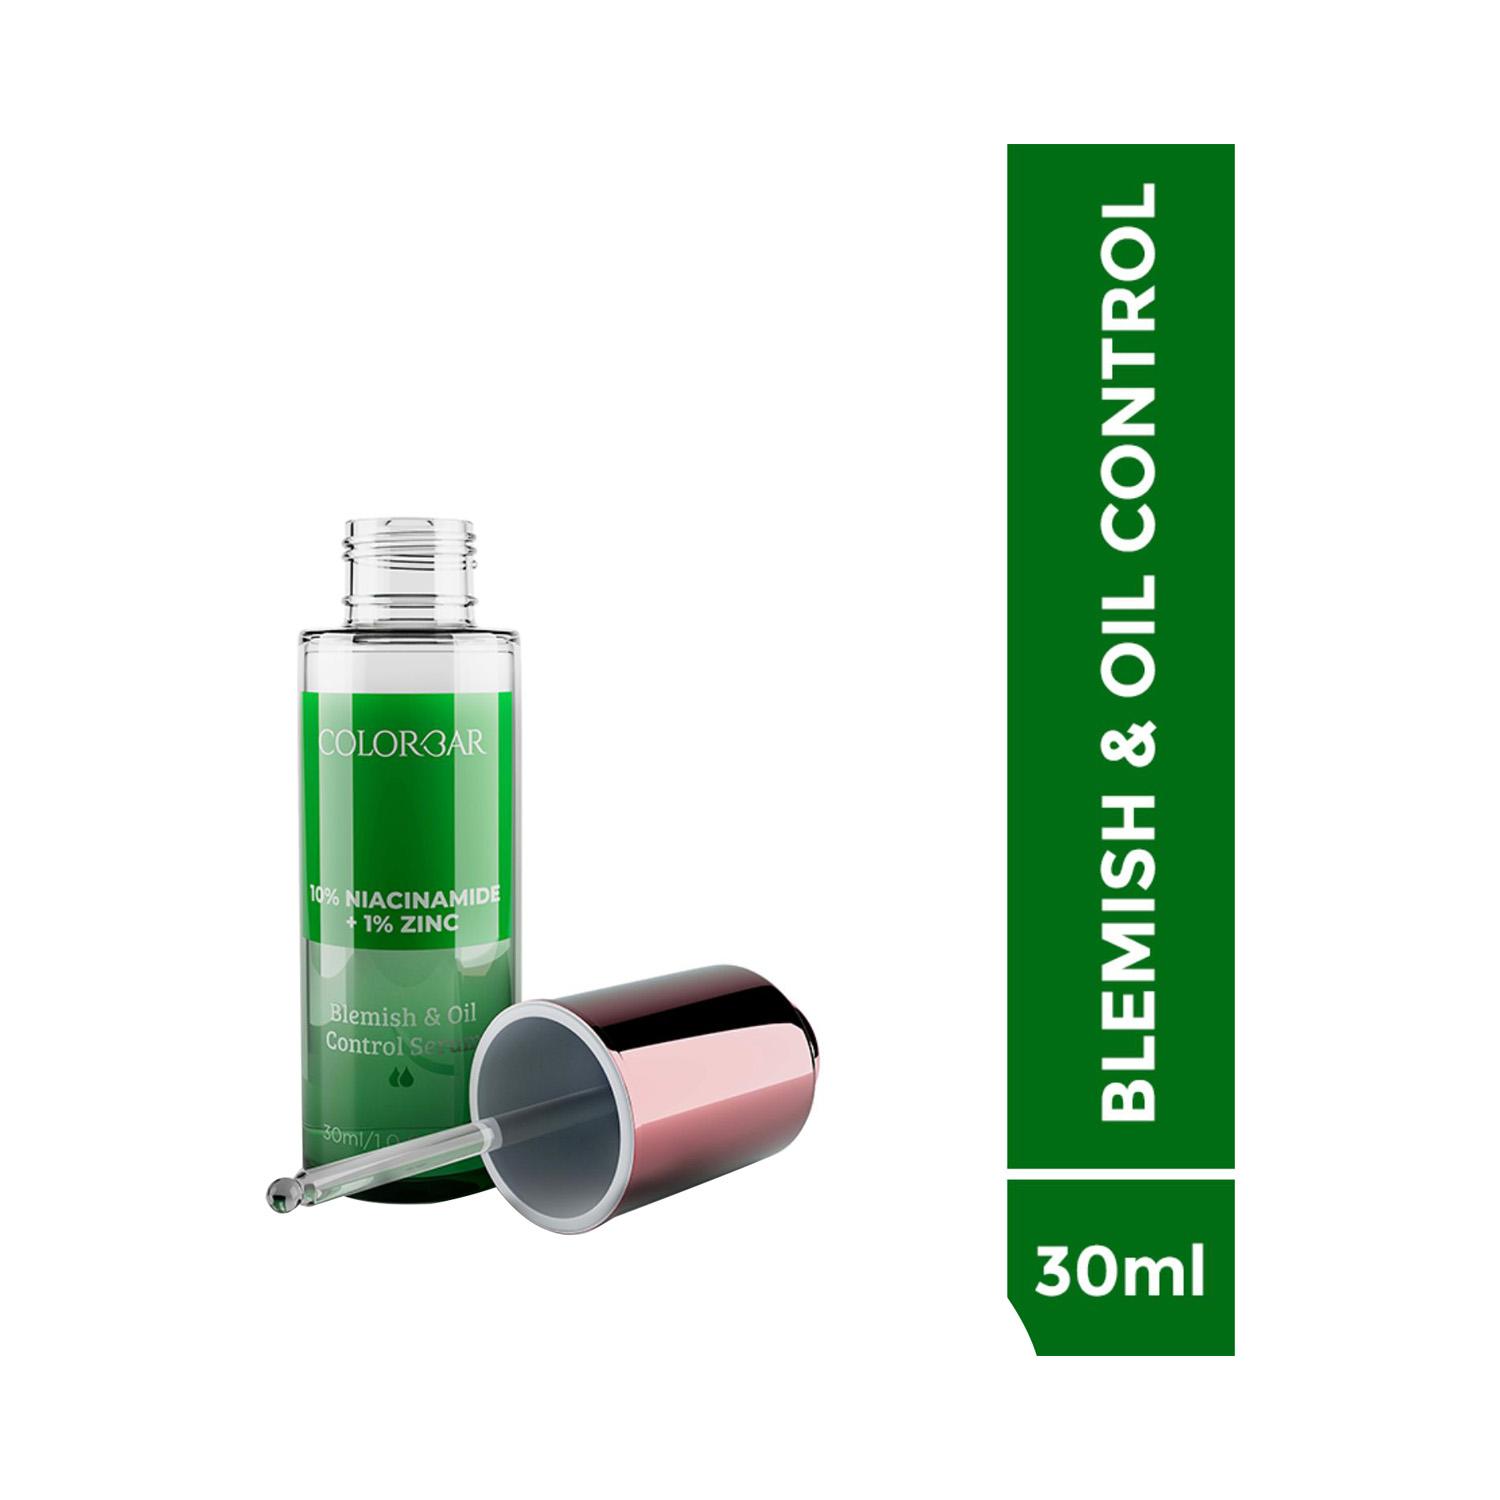 Colorbar | Colorbar Serum 10% Niacinamide + 1% Zinc (30 ml)